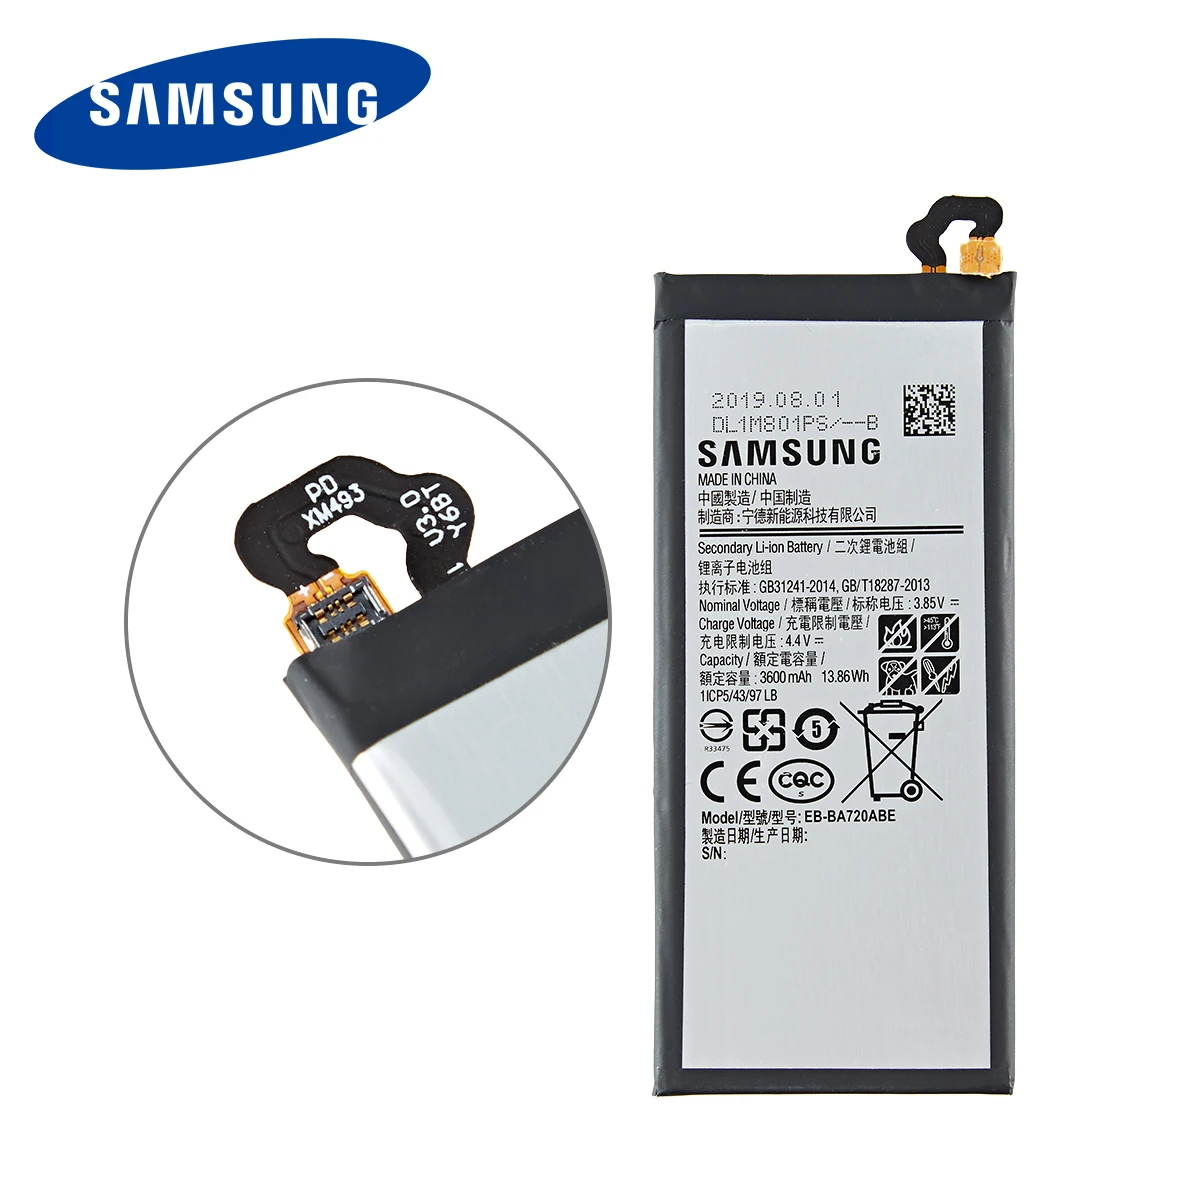 SAMSUNG Orijinal EB-BA720ABE 3600mAh Pil Samsung Galaxy A7 2017 sürümü A720 SM-A720 A720F SM-A720S A720F / DS + Araçları Görüntü 2